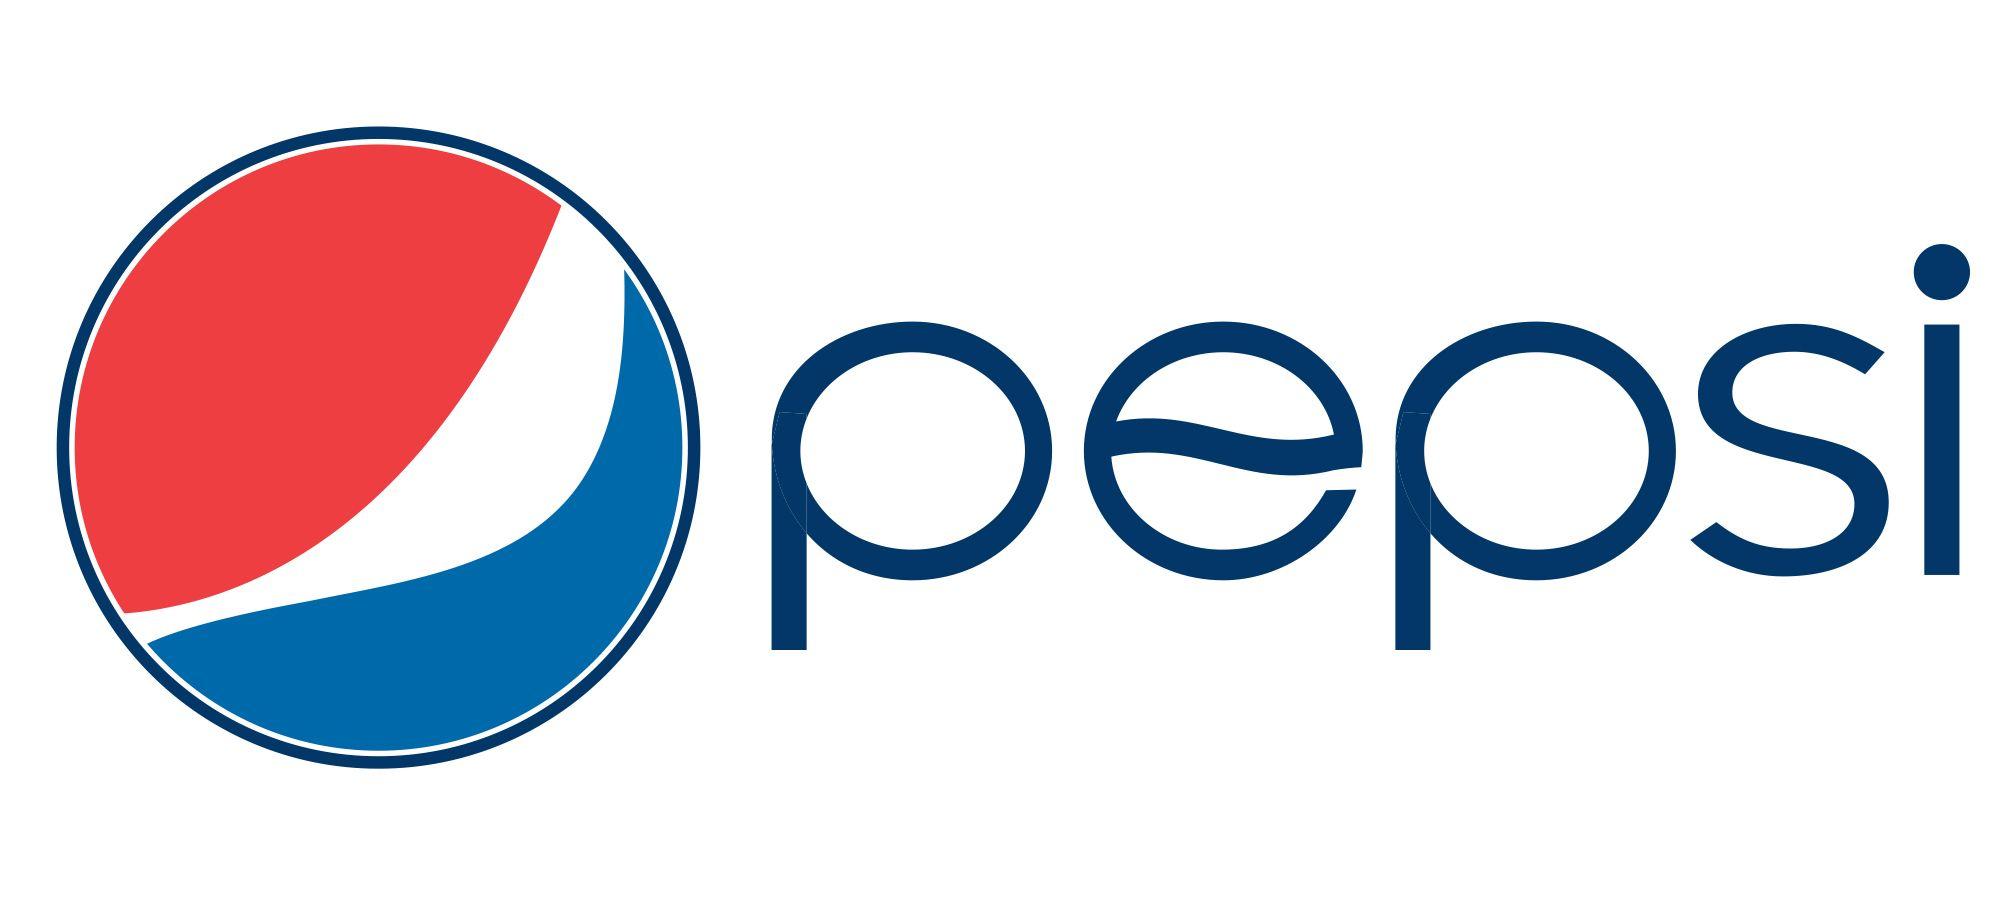 Red Blue Smile Logo - Pepsi Logo, Pepsi Symbol, Meaning, History and Evolution